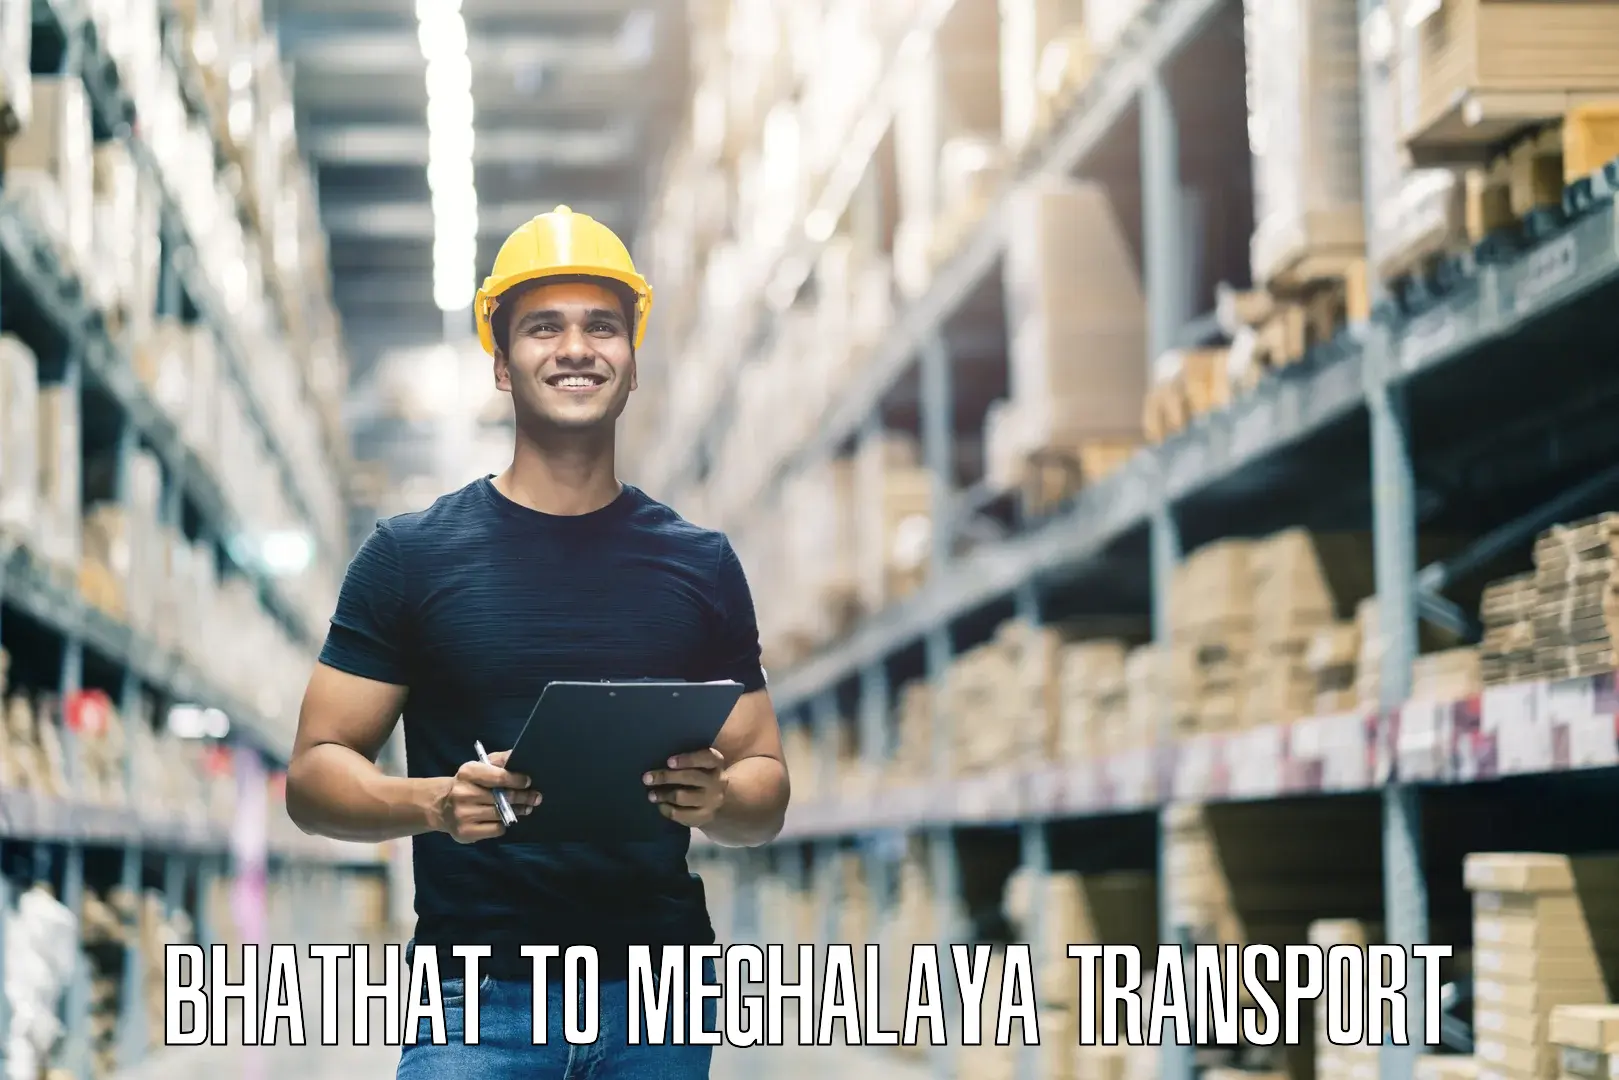 Shipping partner Bhathat to Meghalaya